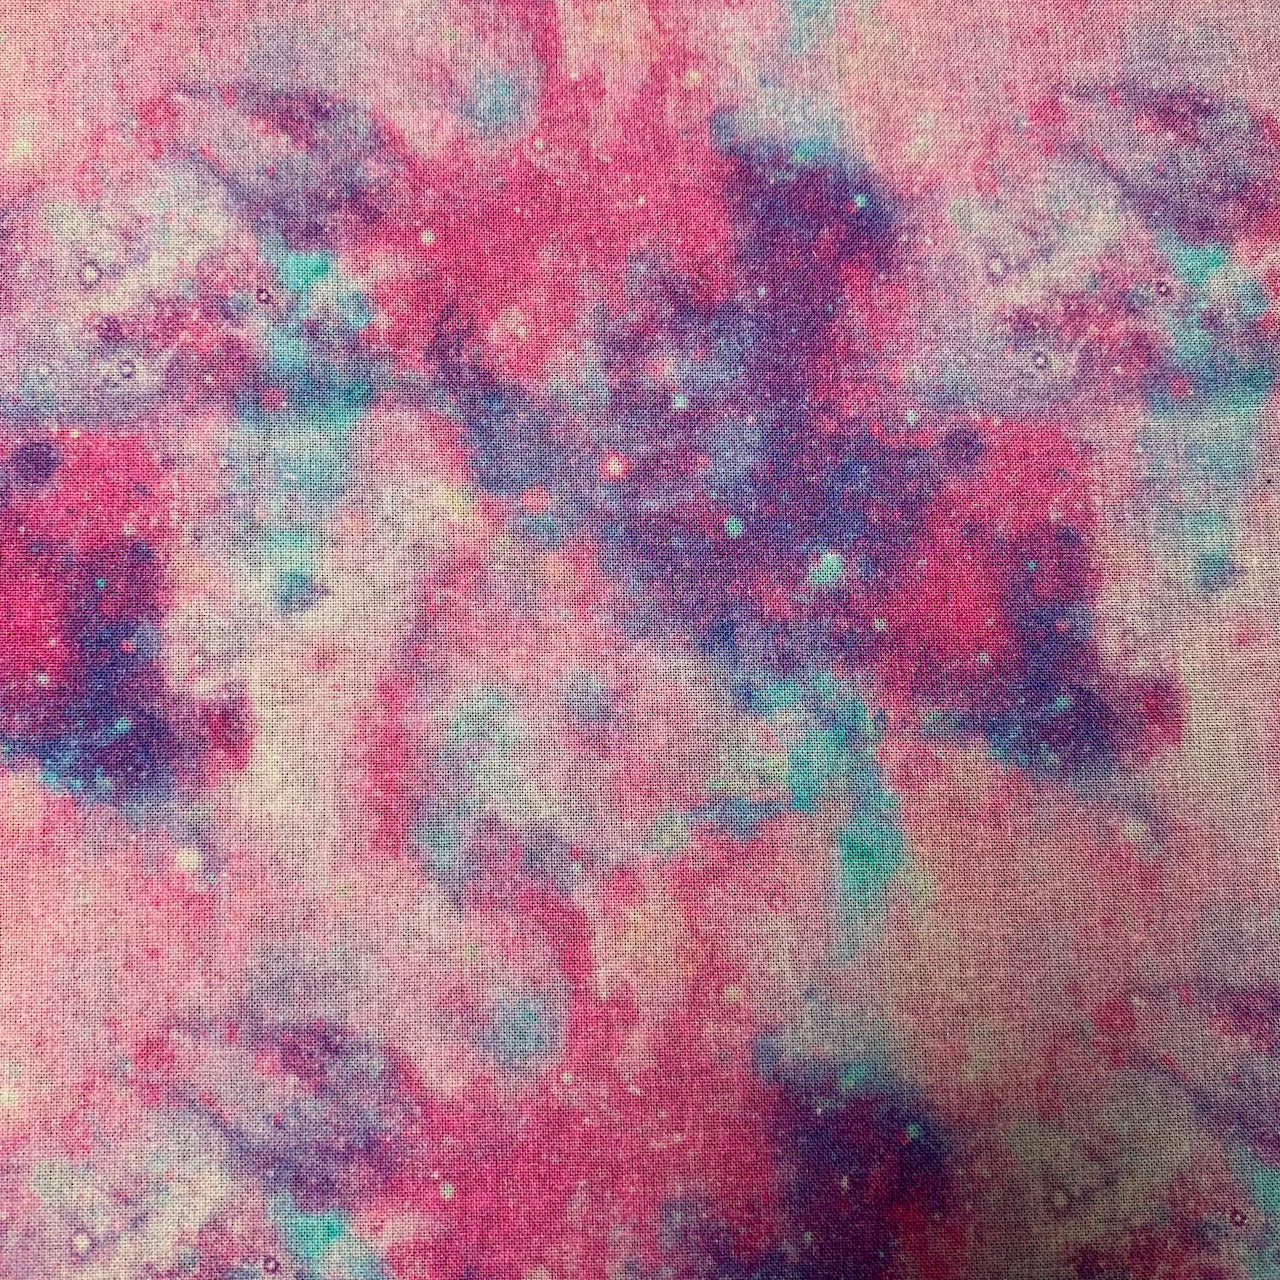 Fabric Felt Sheet - Galaxy - Pink/Purples